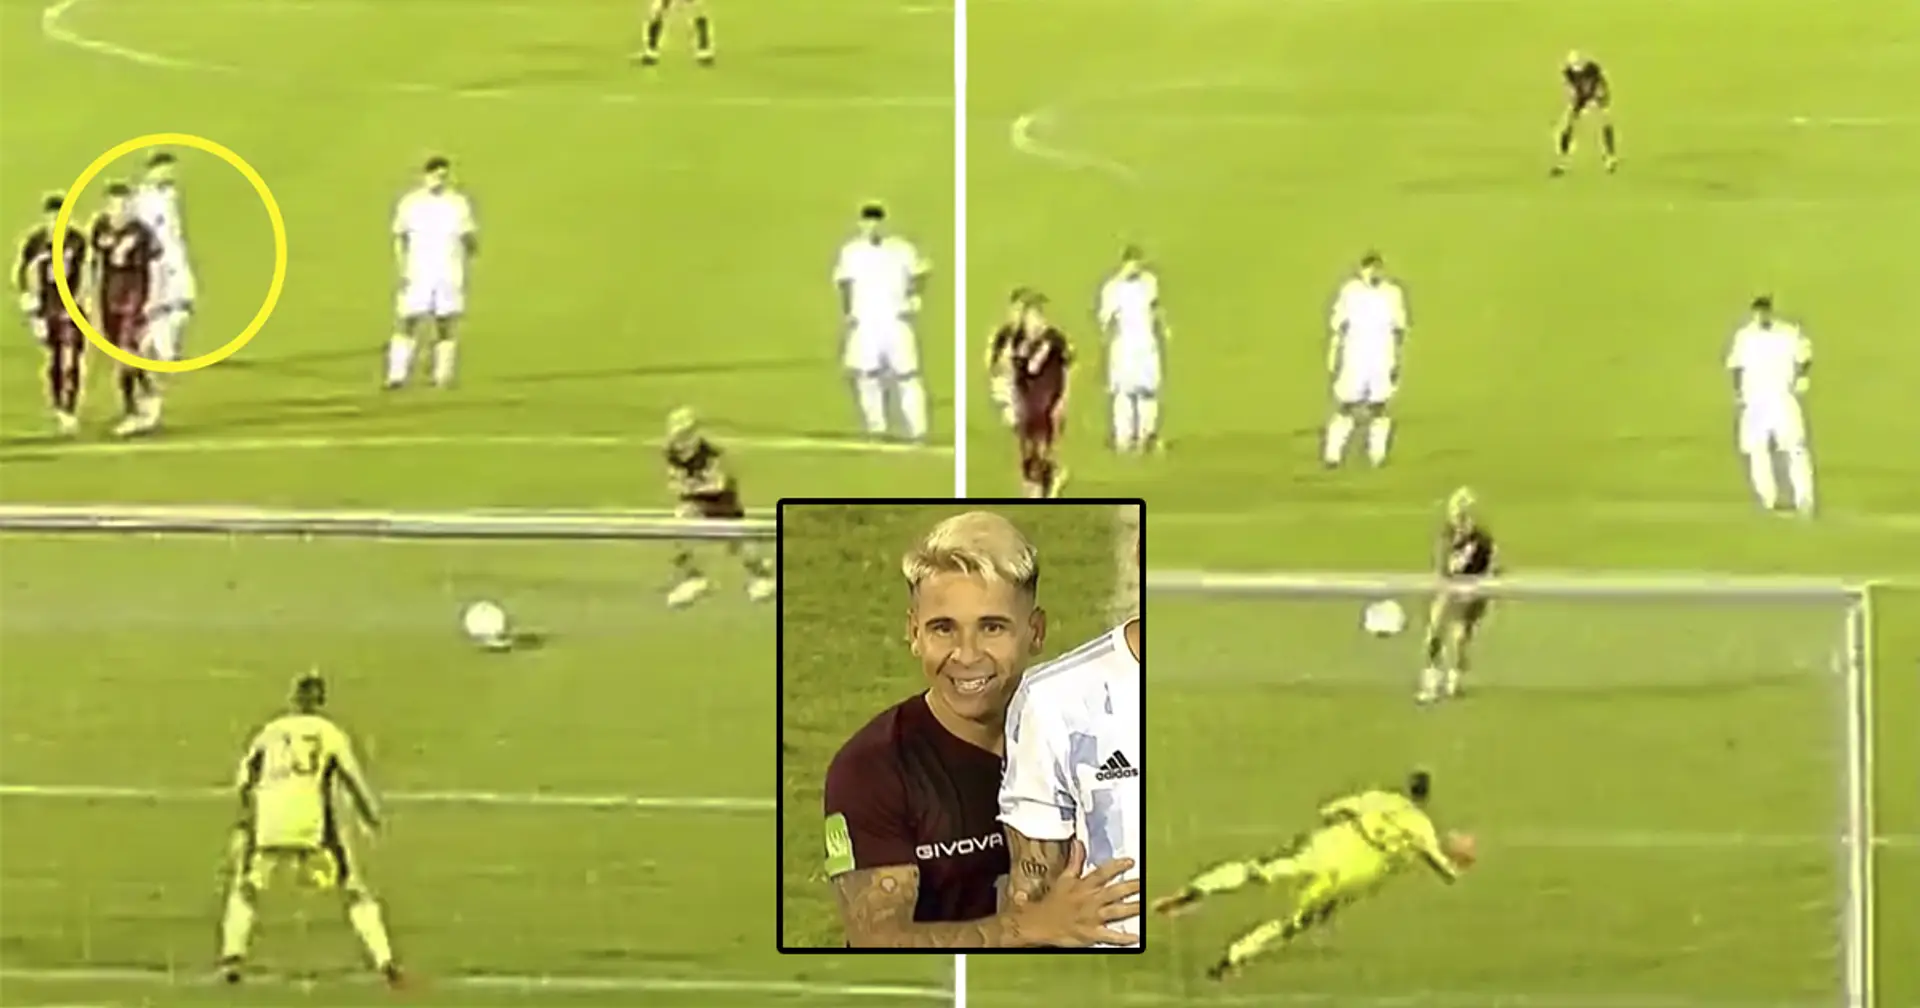 Caught on camera: Messi's amazing reaction to Venezuela player scoring panenka goal